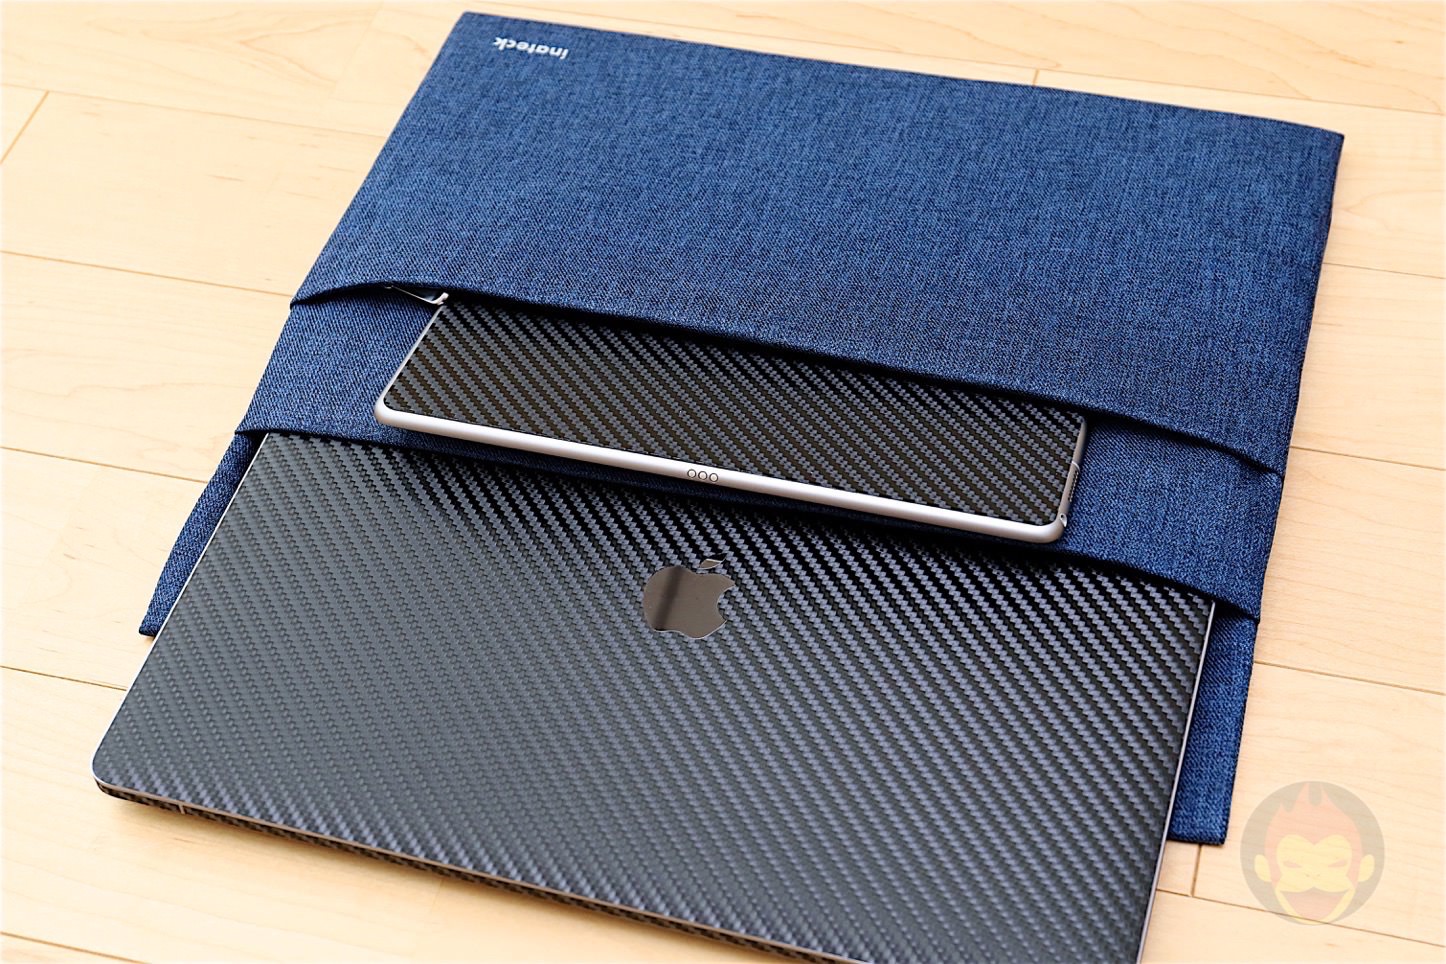 Inateck-MacBookPro15-Case-Review-06.jpg